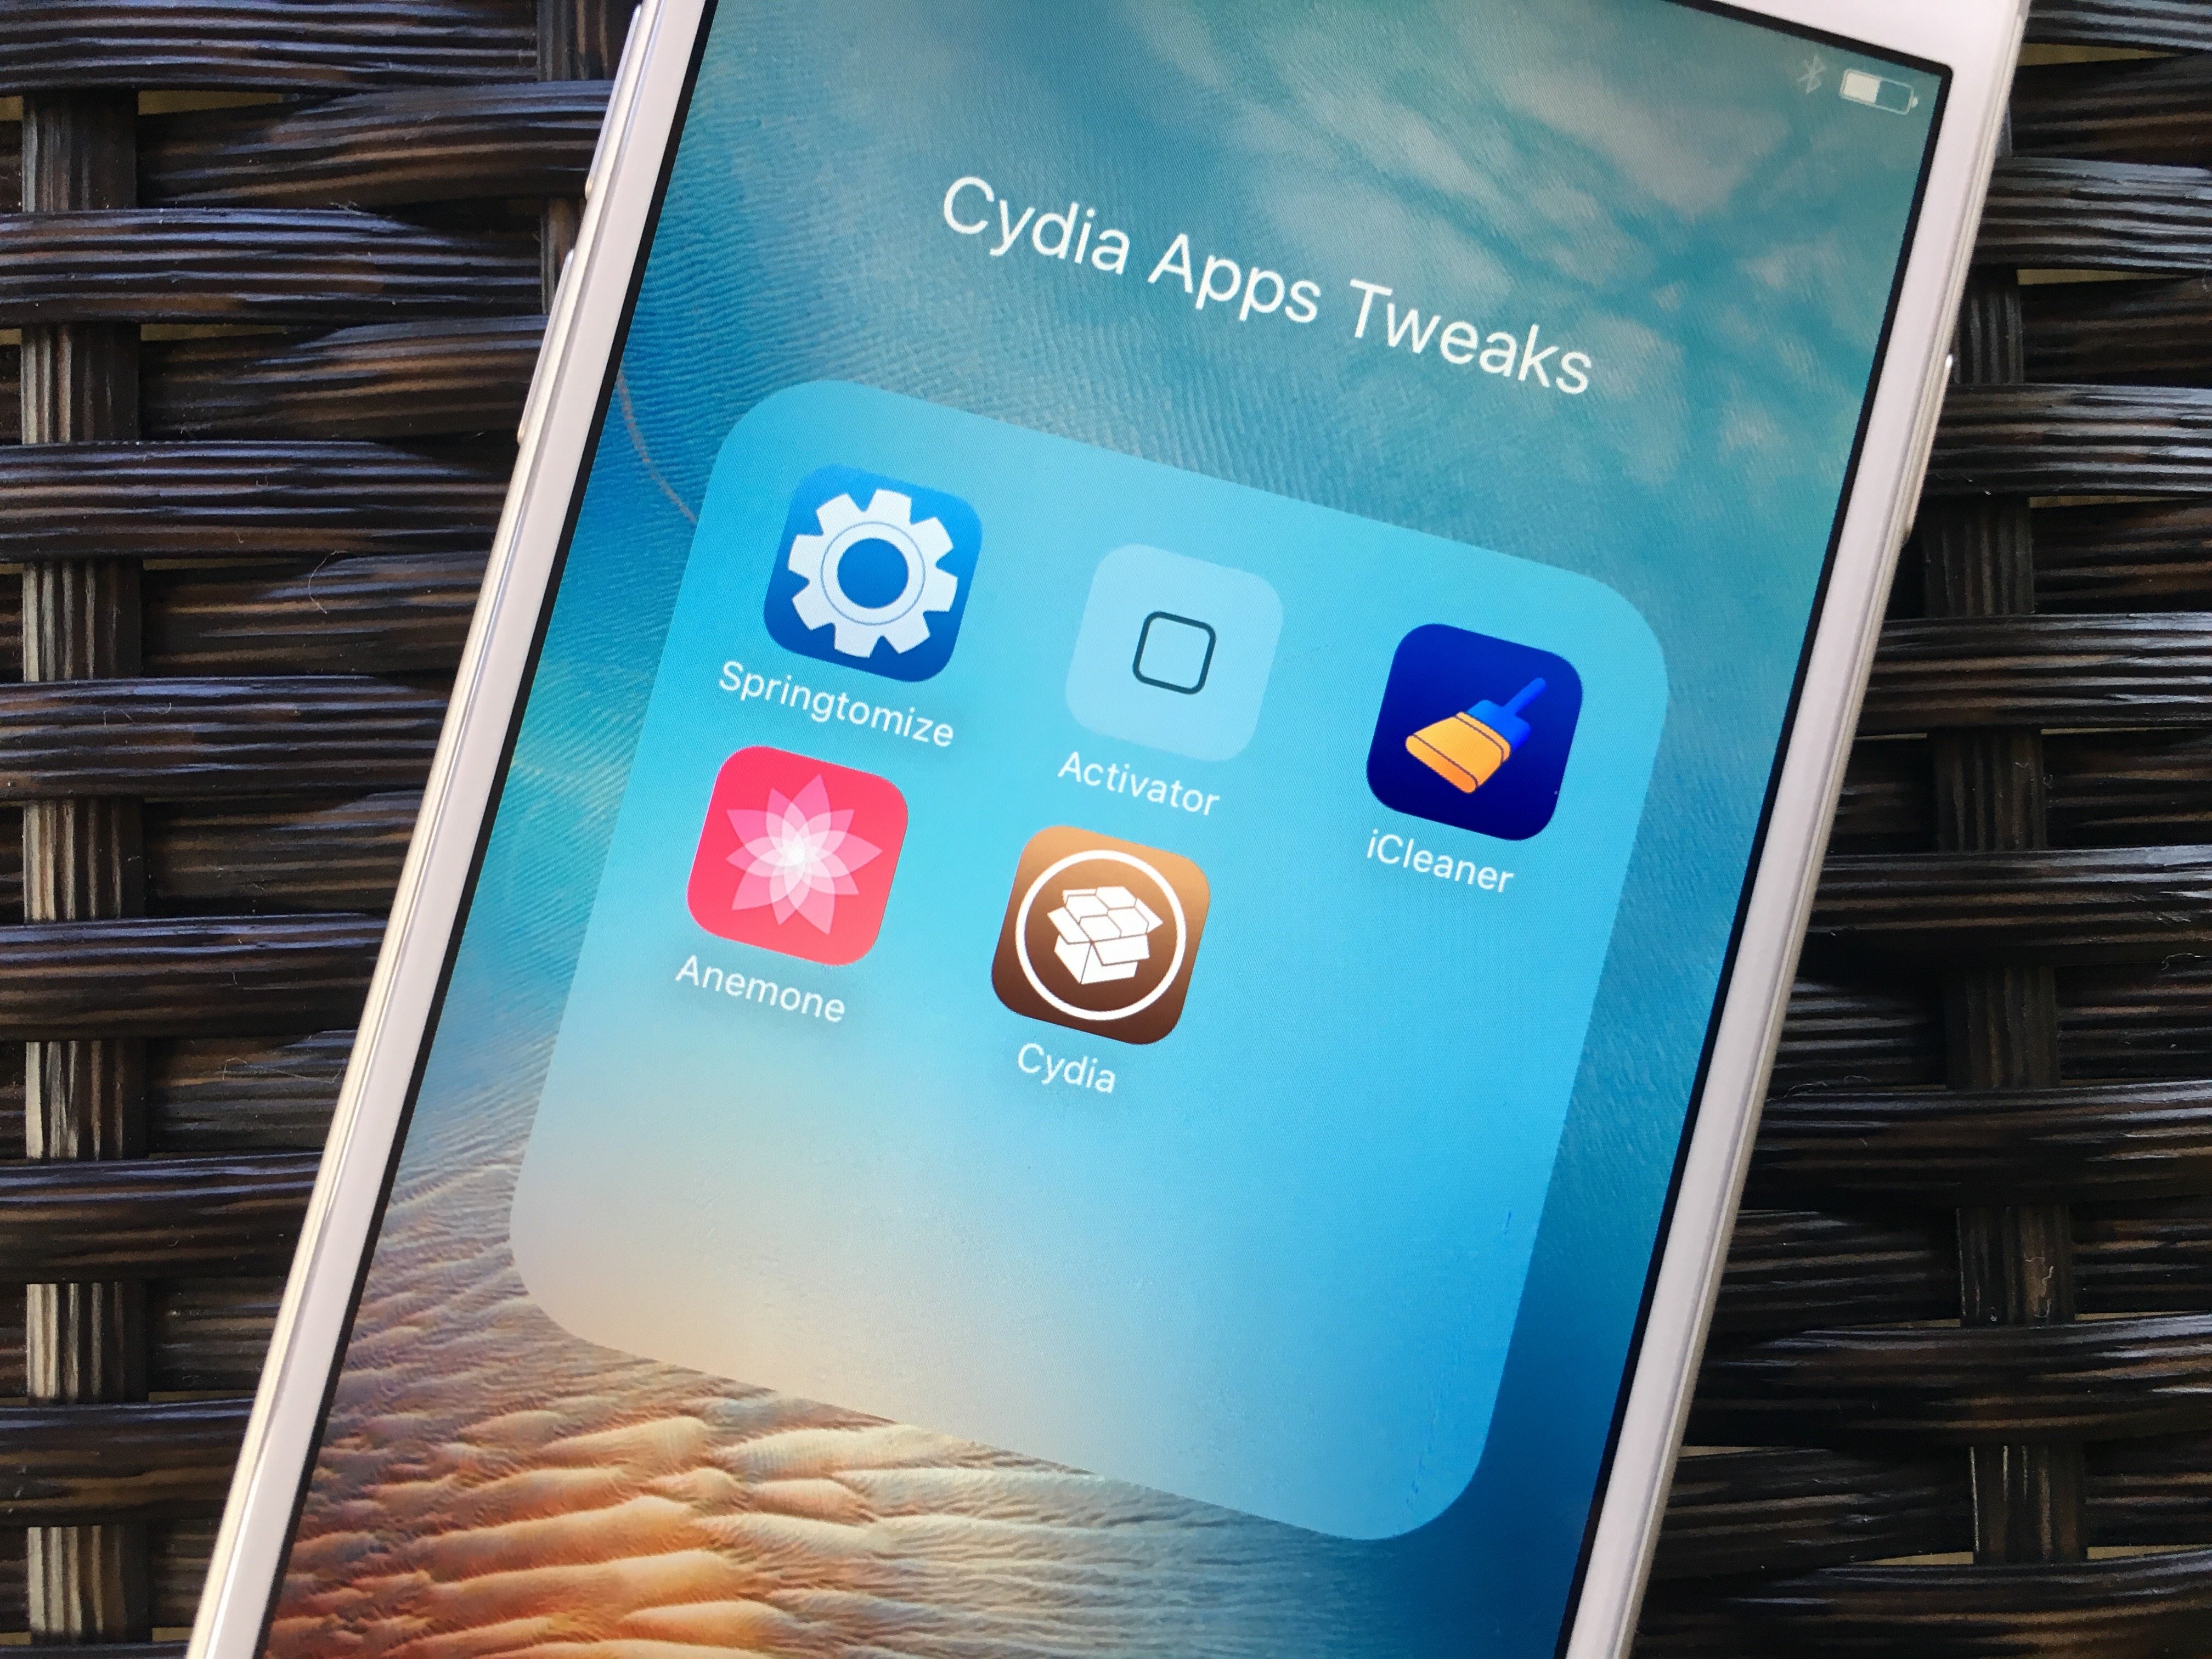 The best iOS 9 Cydia tweaks and jailbreak apps for iOS 9.3.3 through iOS 9.